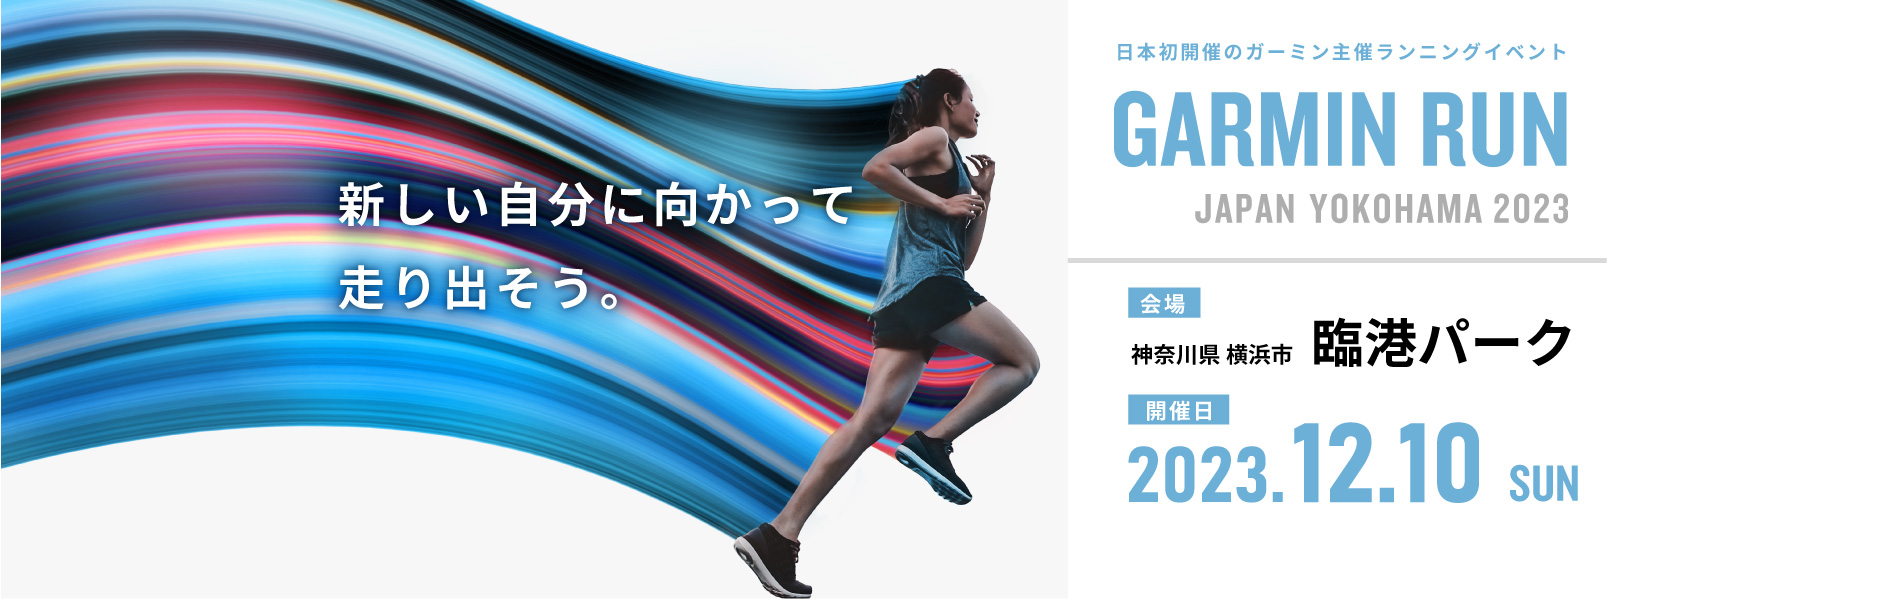 GARMIN RUN JAPAN 2023 日本初開催のガーミン主催ランニングイベント